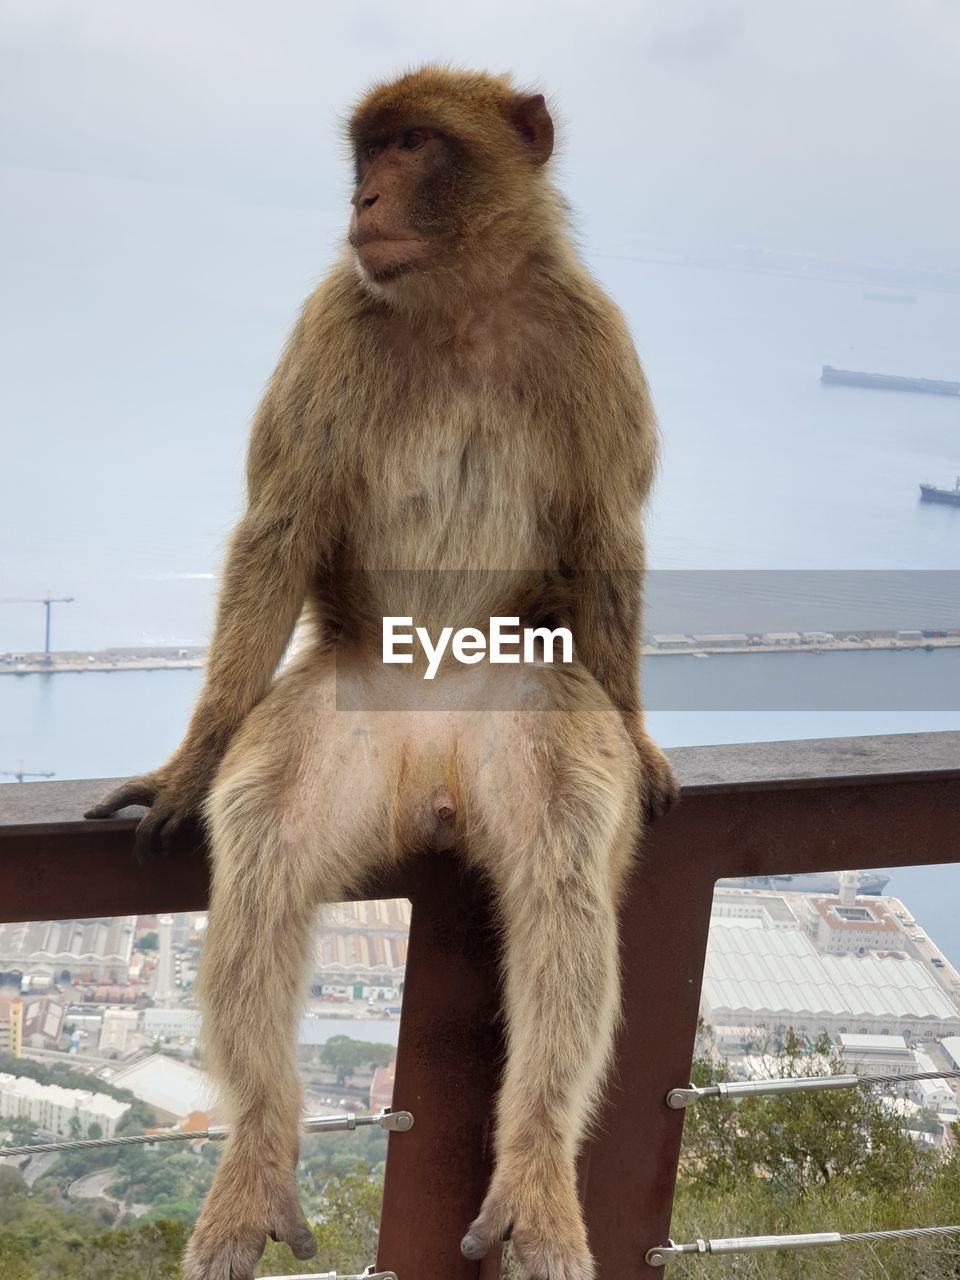 Monkey in gibraltar